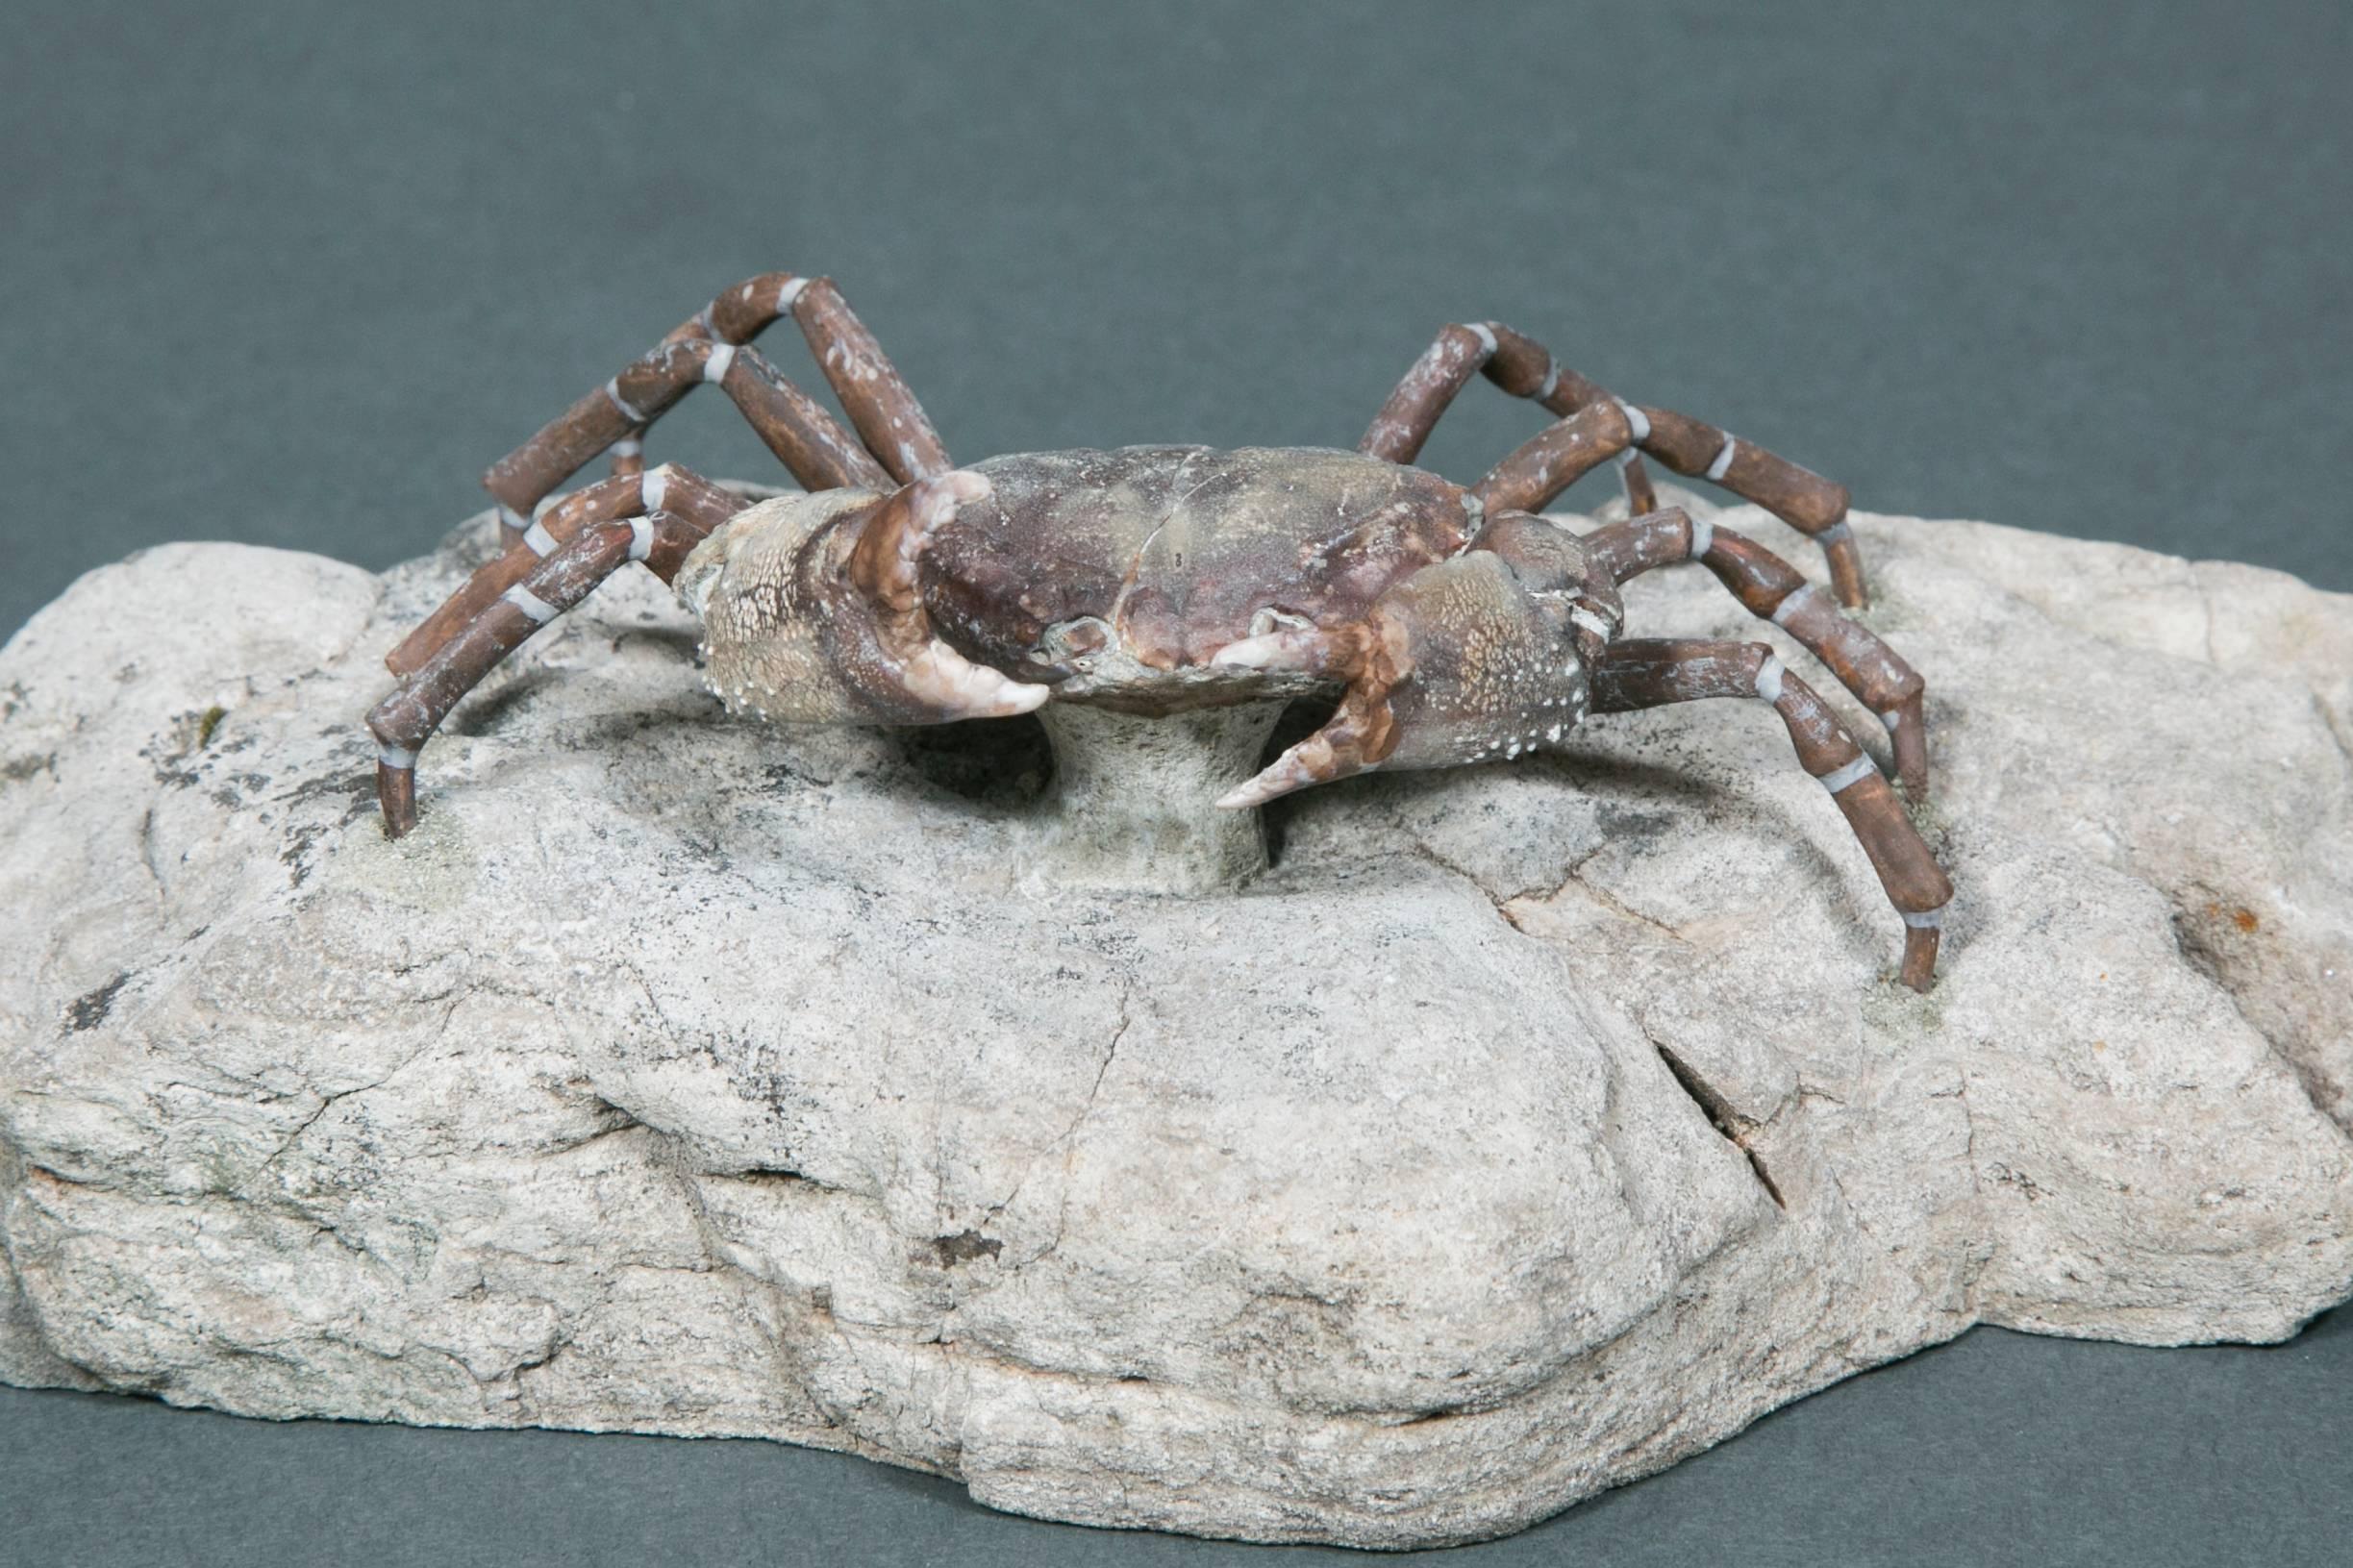 Fossil crab free from its matrix, Galene granulifera, Pliocene, Hsinchu- Hsien, Taiwan.
Overall dimension: Length 22 cm x width 10 cm x height 8 cm.
 